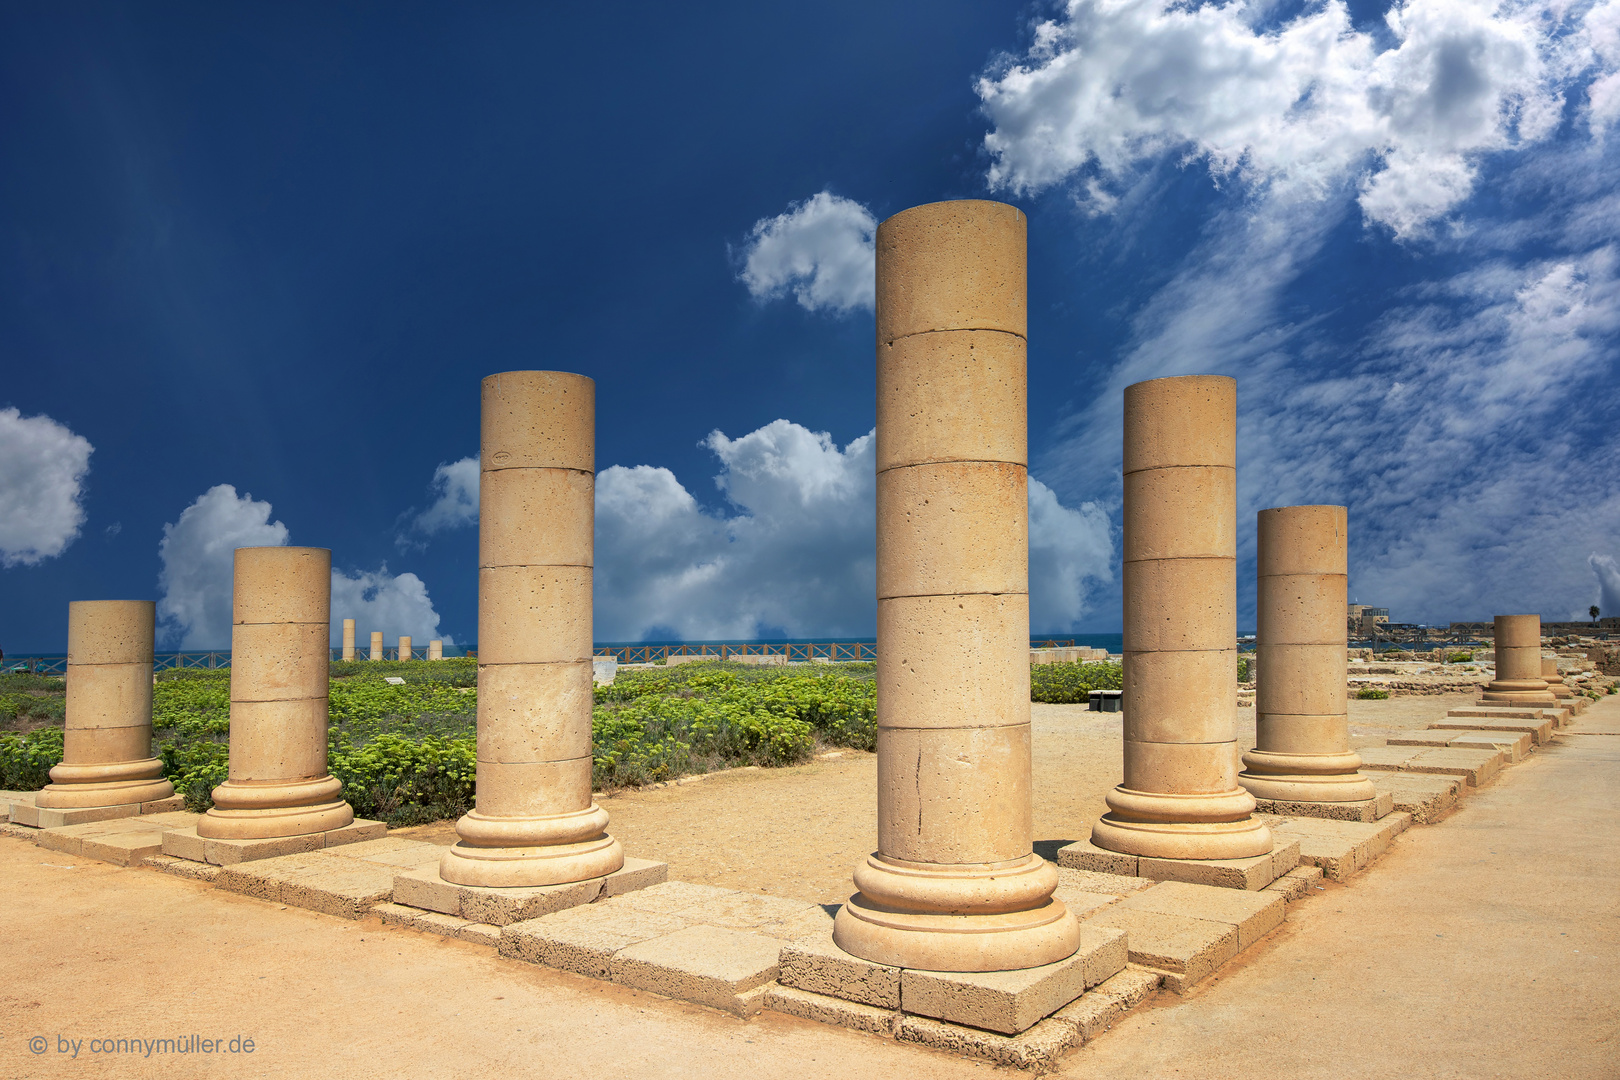 The Caesarea Columns